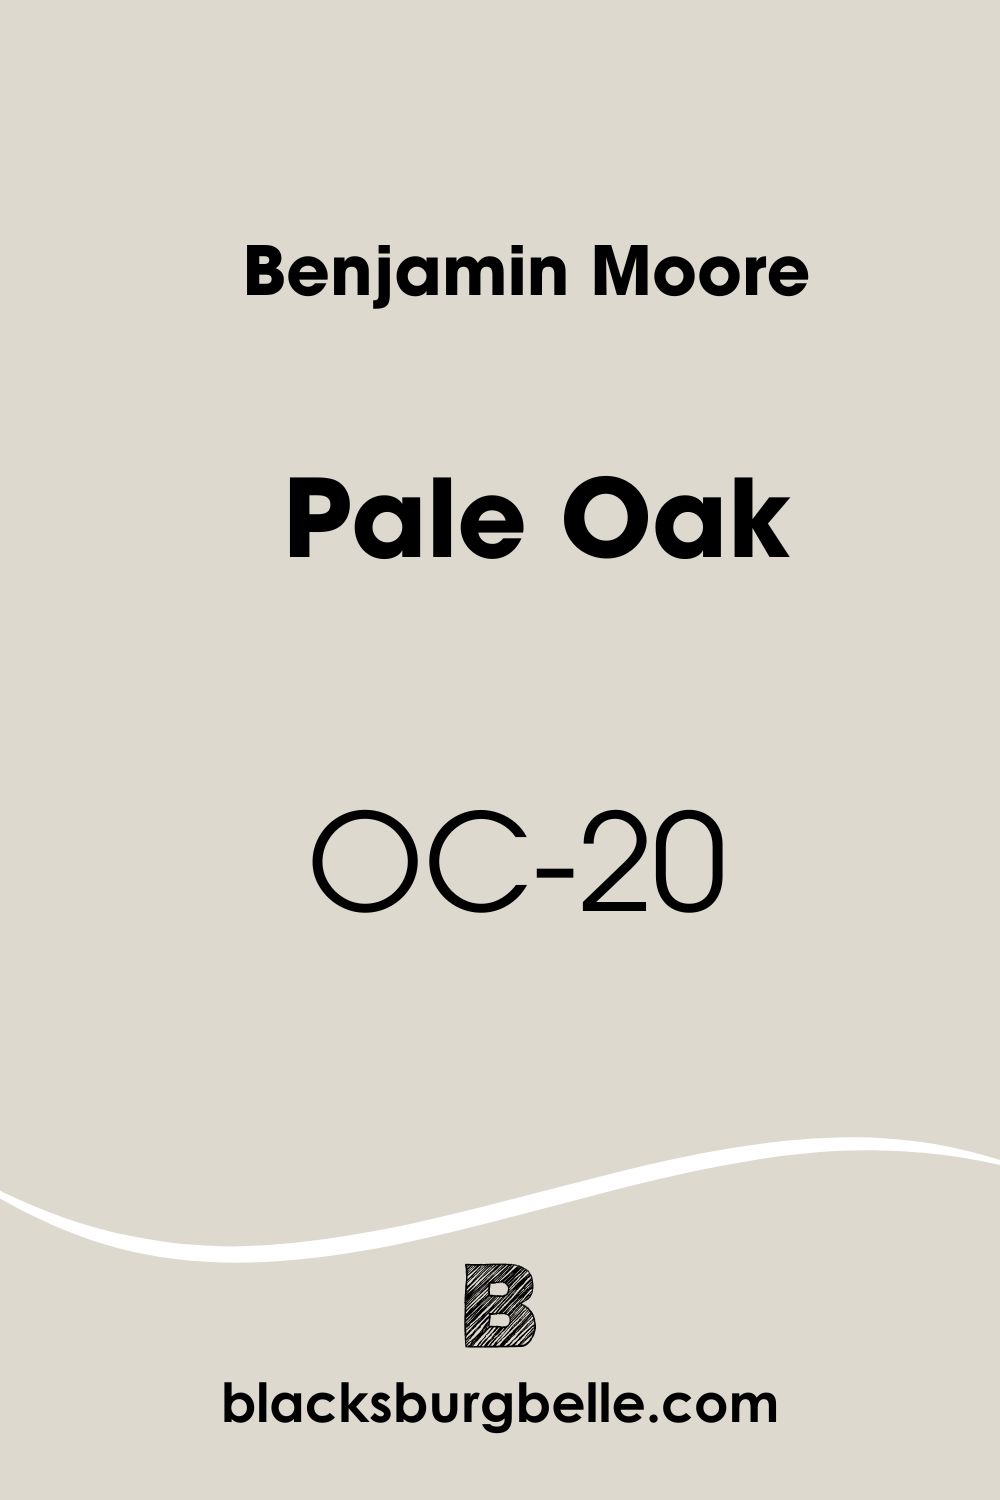 Benjamin Moore Pale Oak OC-20 